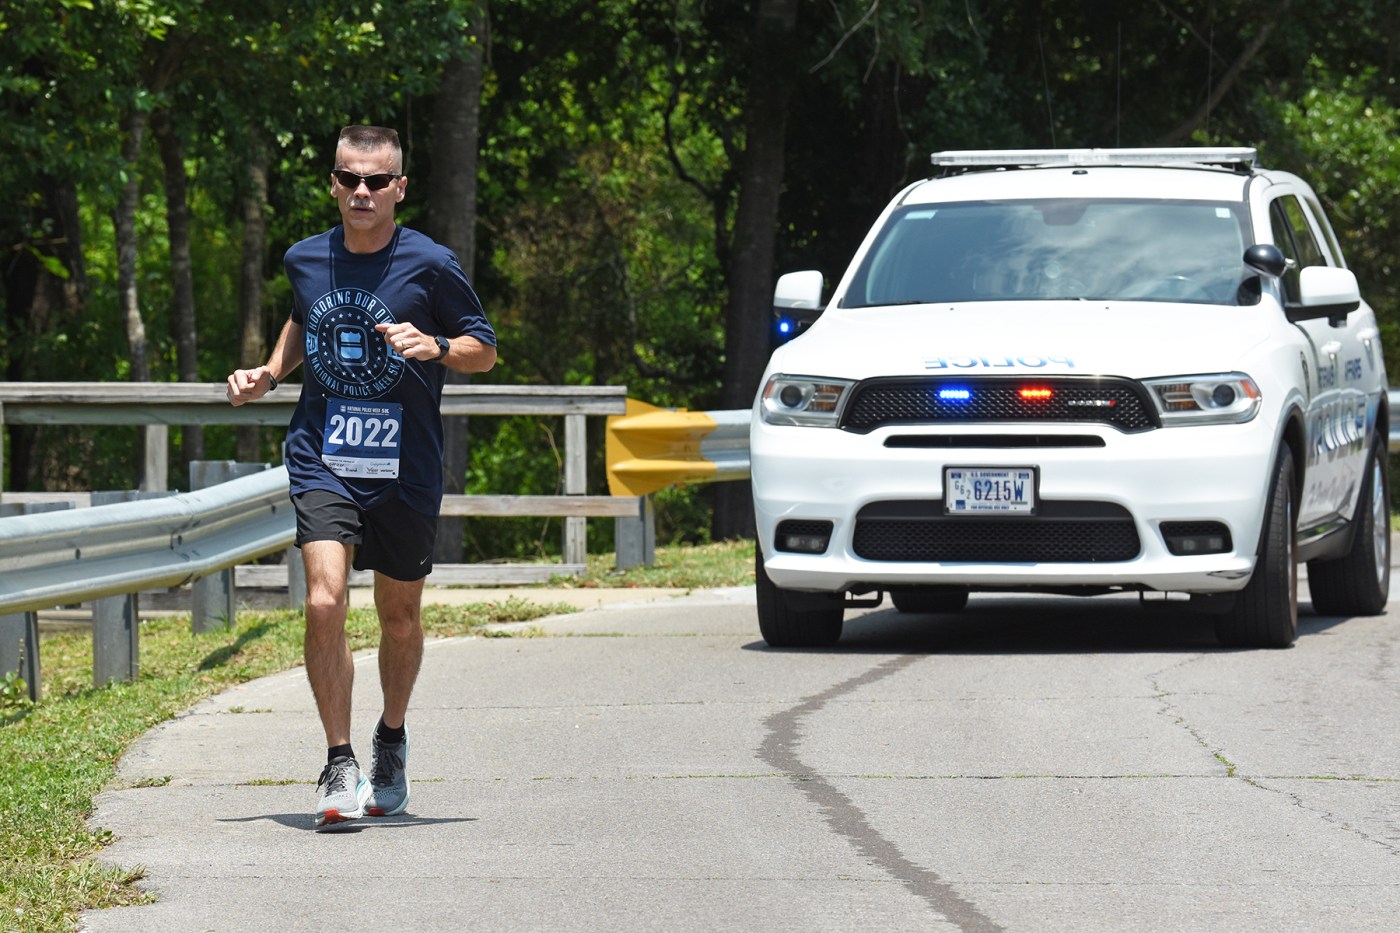 Biloxi VA Chief of Police runs to honor fallen officer